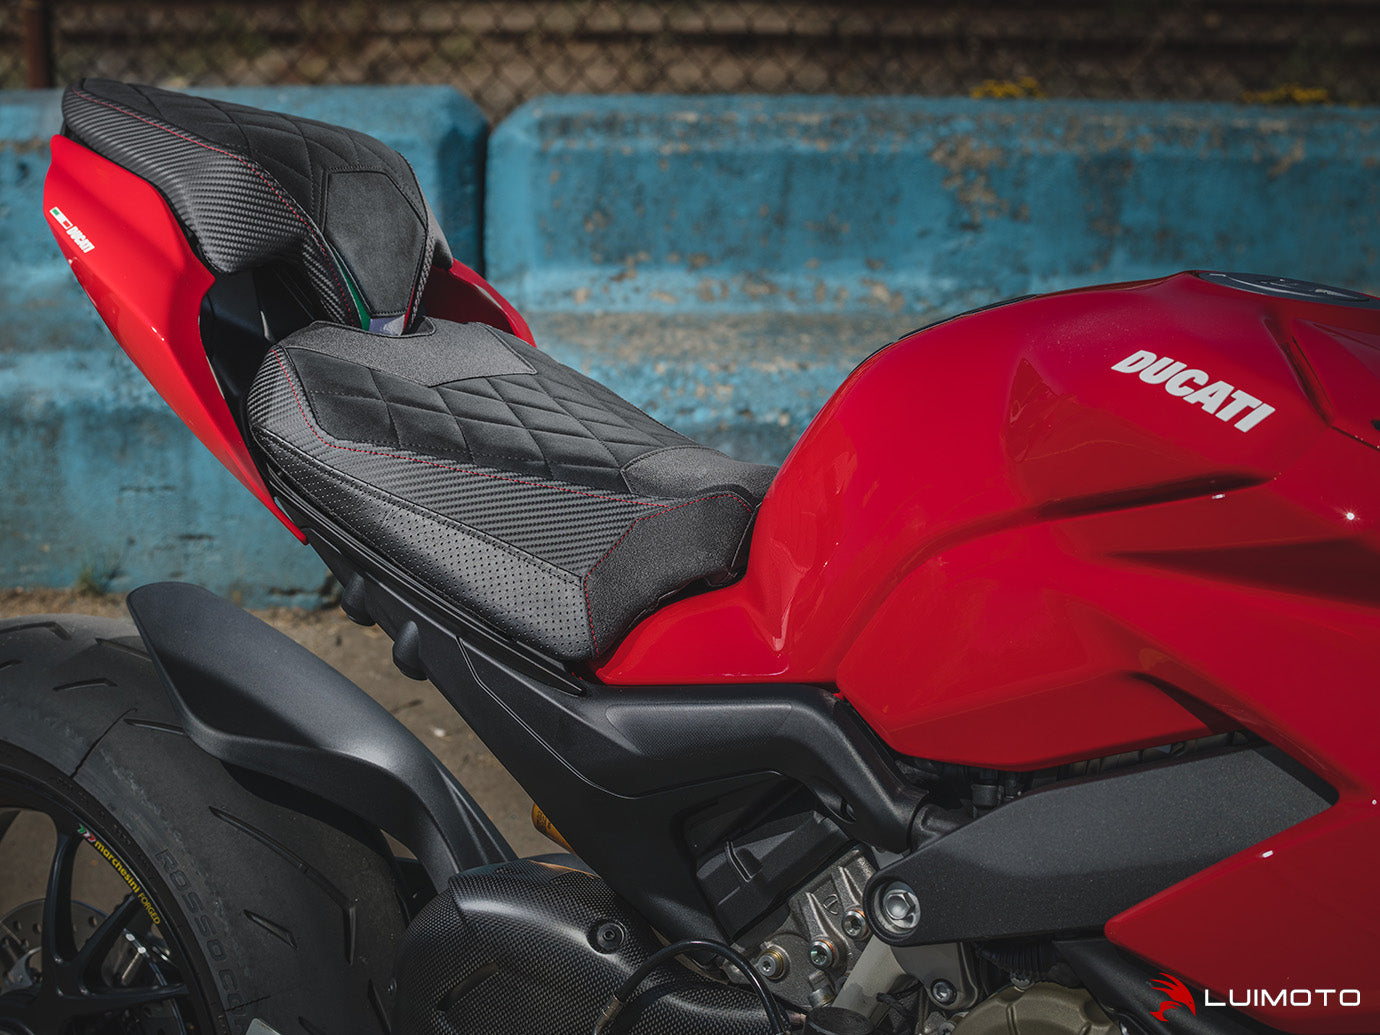 Luimoto Diamond Grezzo Passenger Seat Cover for Ducati Streetfighter V4